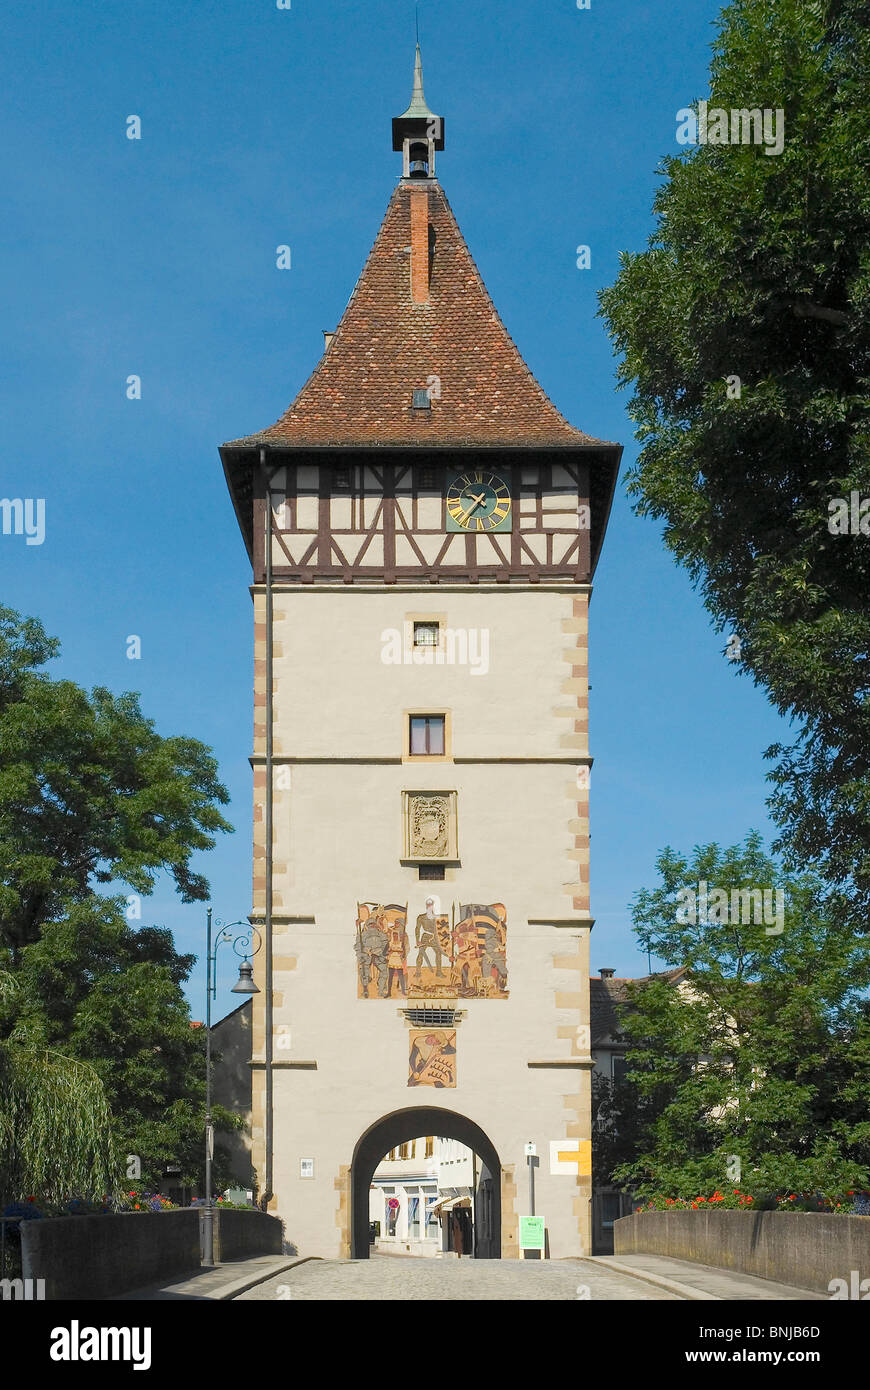 Allemagne Waiblingen Beinsteiner gate town tower chemin à travers la ville cadre arbres Banque D'Images